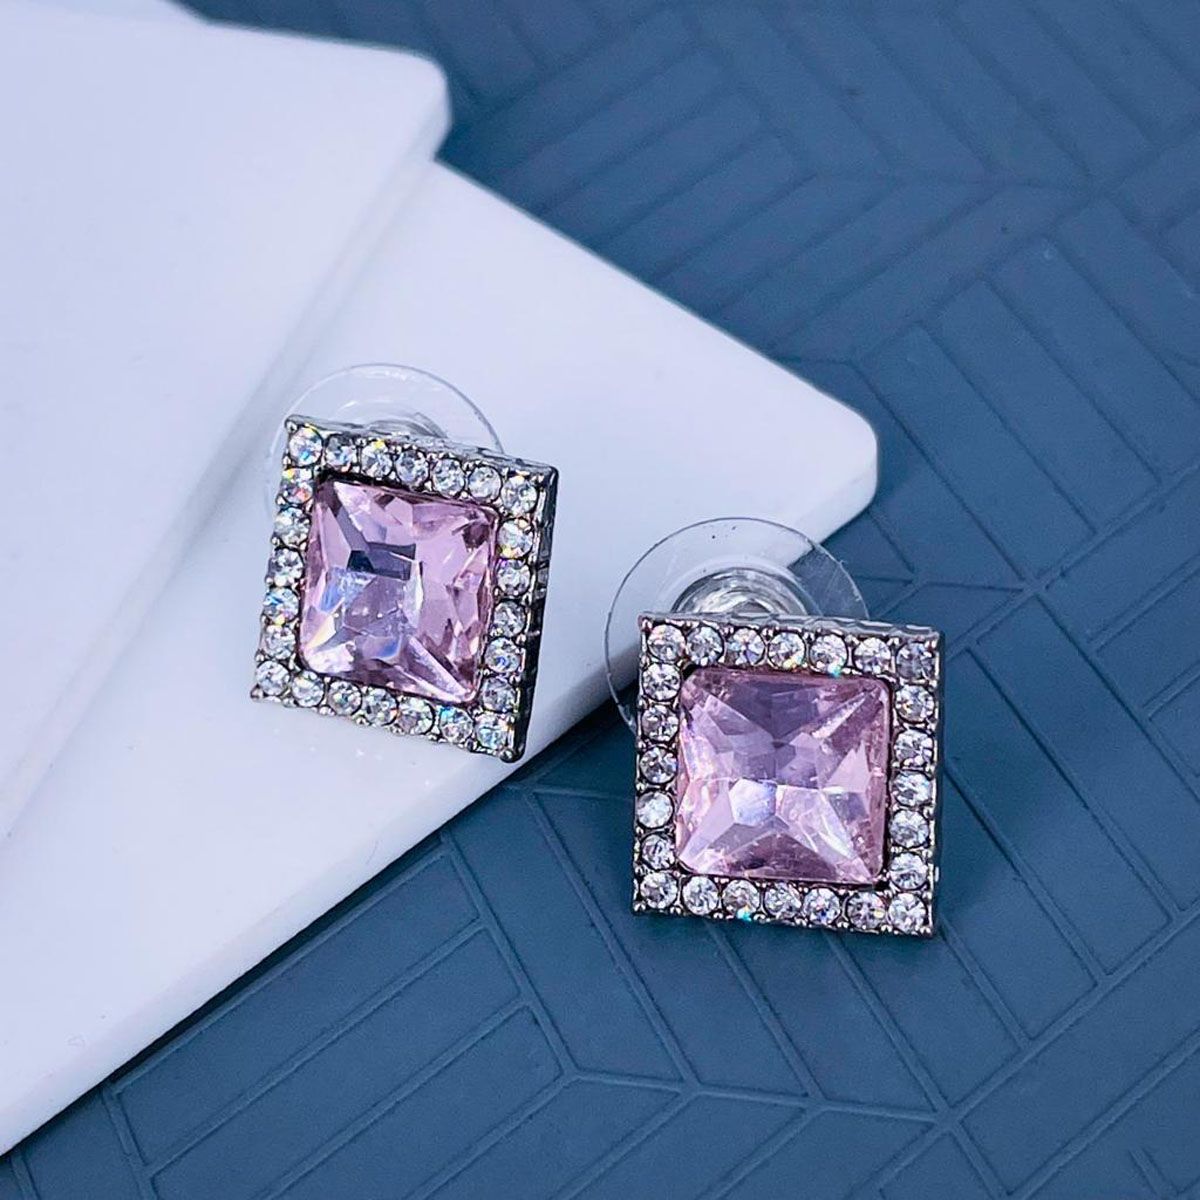 Rhombus Aaa Crystal American Diamond Border Pink Rhodium Stud Earring